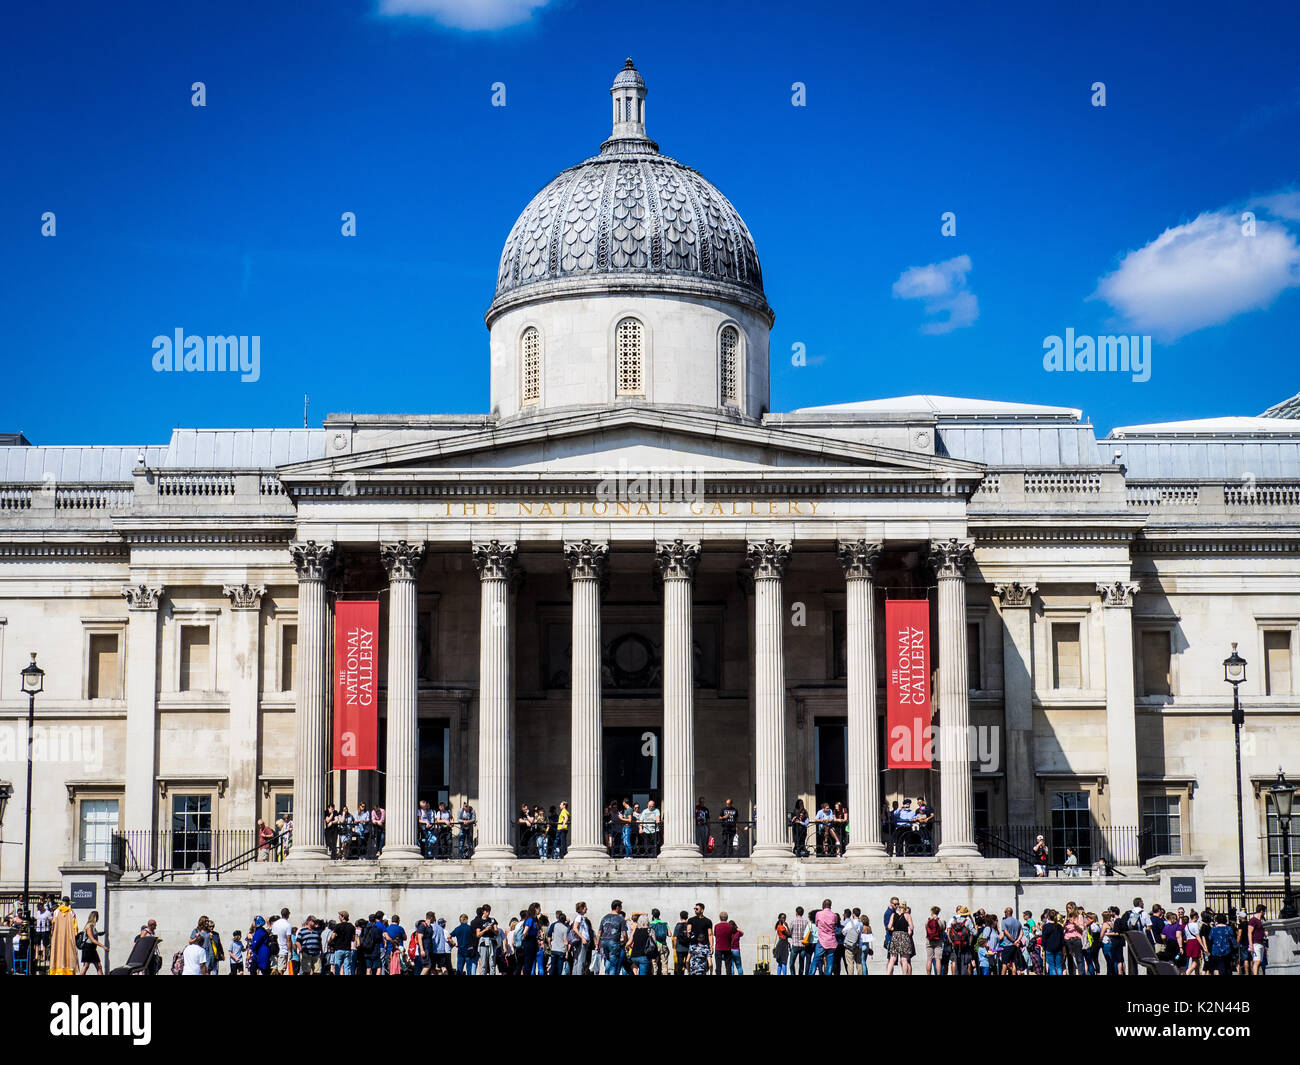 National Gallery London - Massen vor dem Haupteingang in die National Gallery am Trafalgar Square, Central London, UK Stockfoto